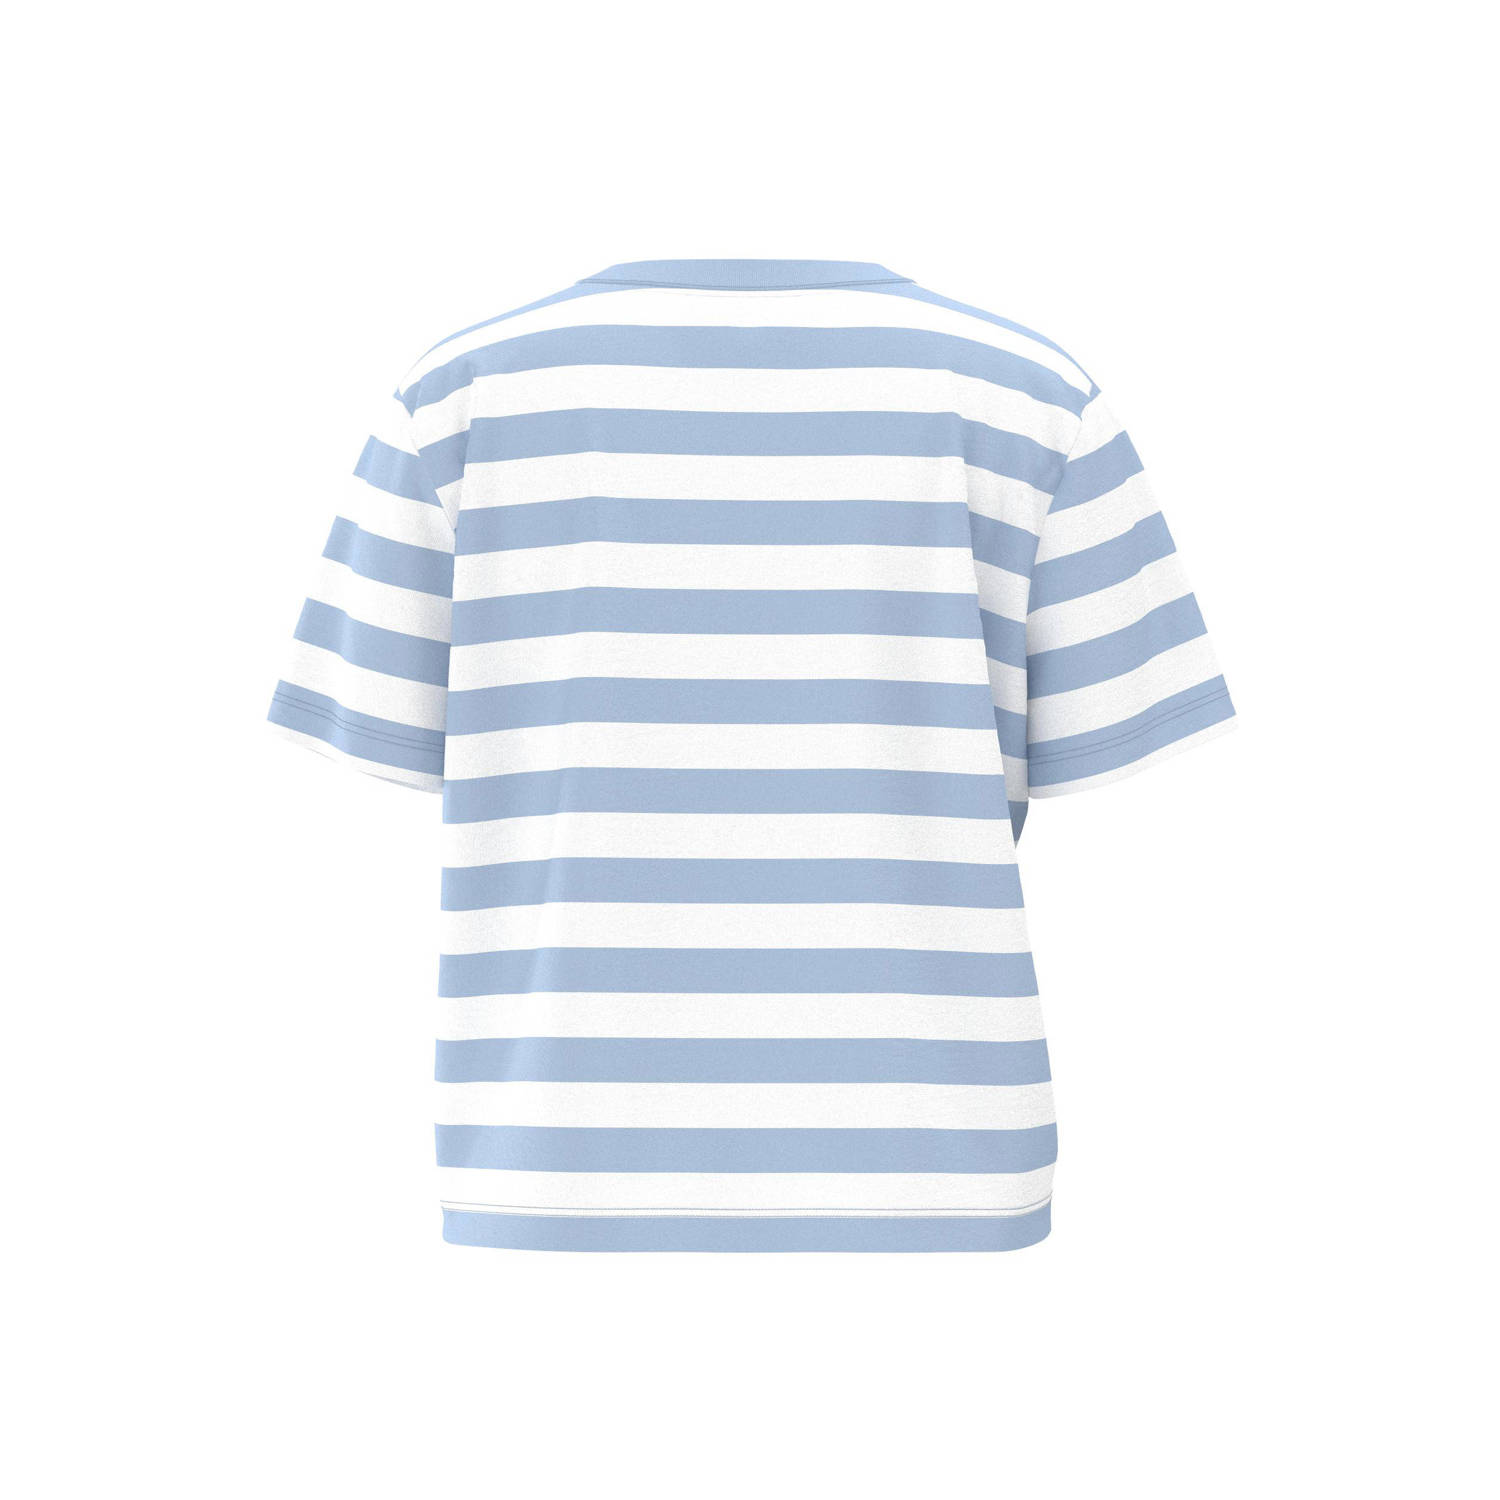 SELECTED FEMME gestreept T-shirt SLFESSENTIAL blauw wit